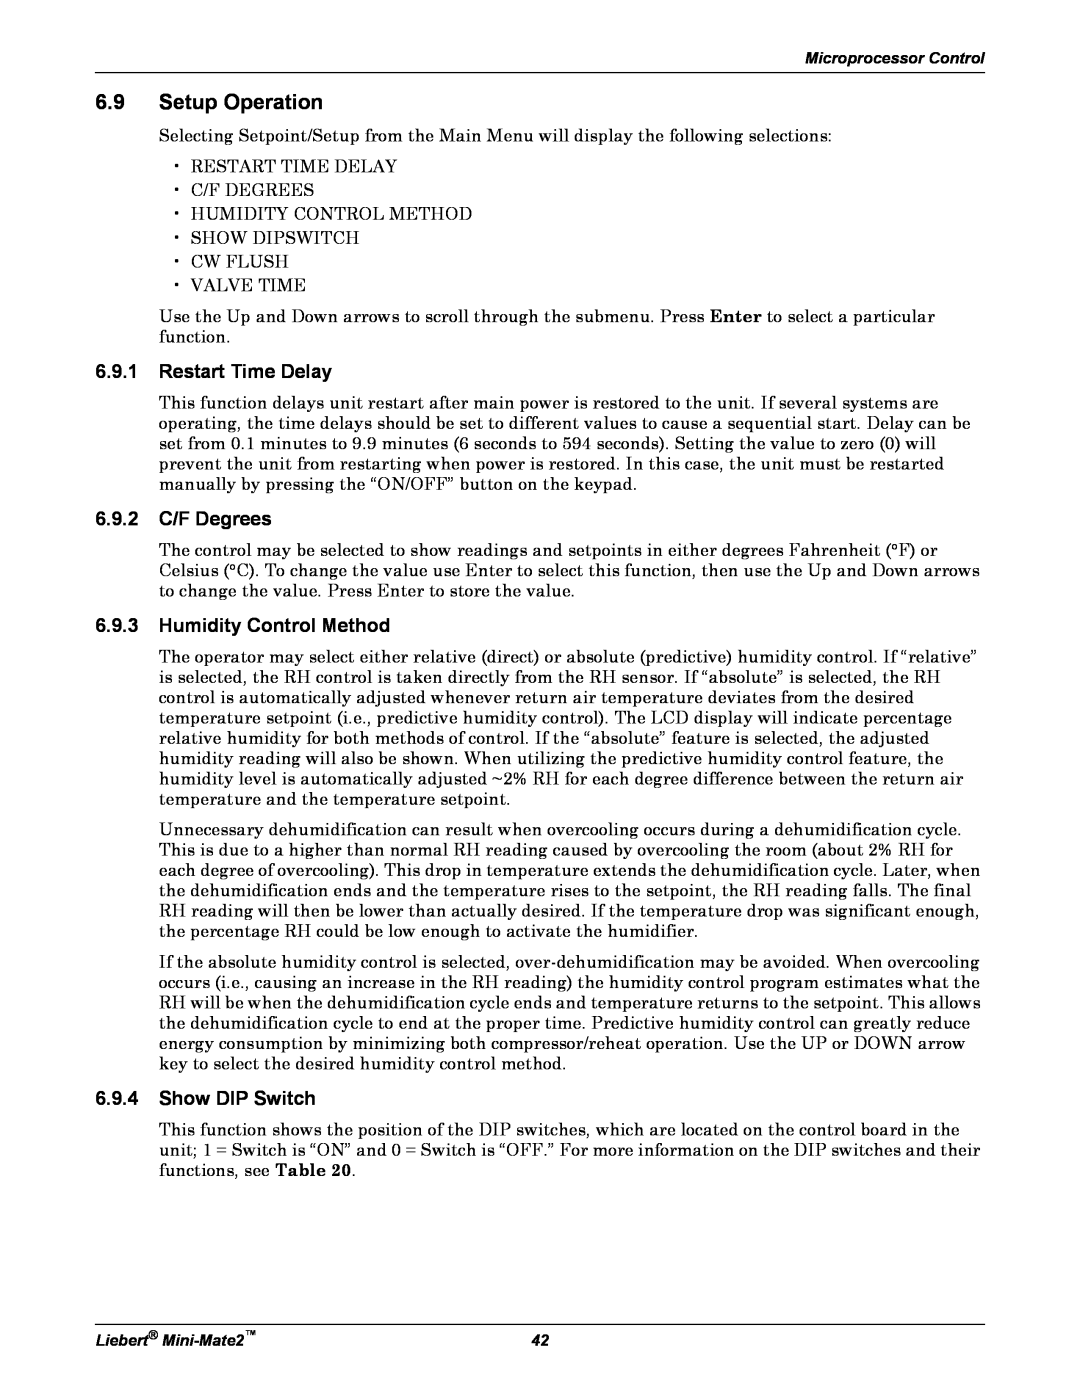 Emerson MINI-MATE2 user manual 6.9Setup Operation, 6.9.1Restart Time Delay, 6.9.2C/F Degrees, 6.9.3Humidity Control Method 